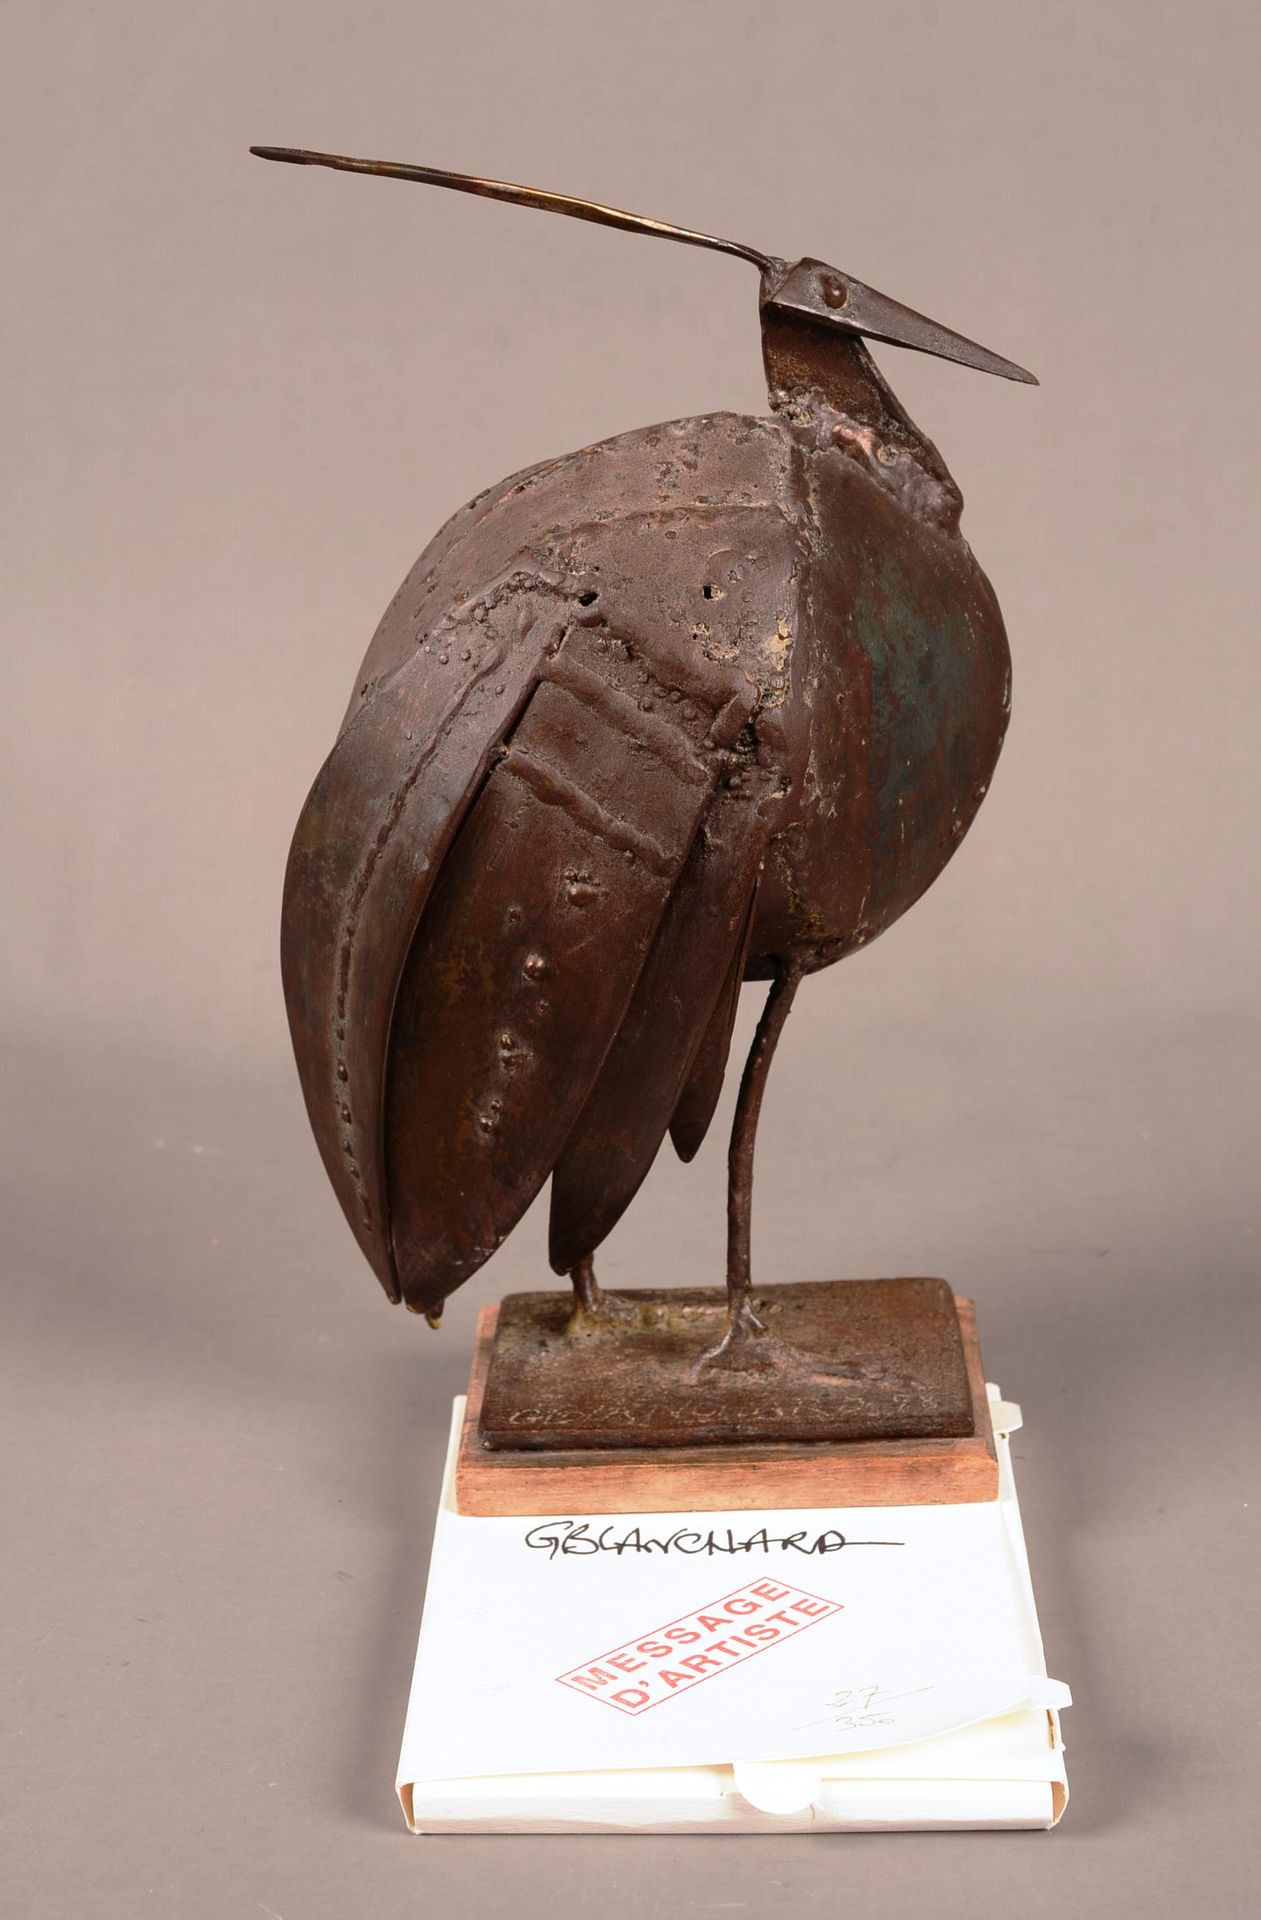 Gilles BLANCHARD (1953) 吉勒-布朗夏（Gilles BLANCHARD） (1953)

"鸟"。

金属雕塑，有签名和日期98。

尺&hellip;